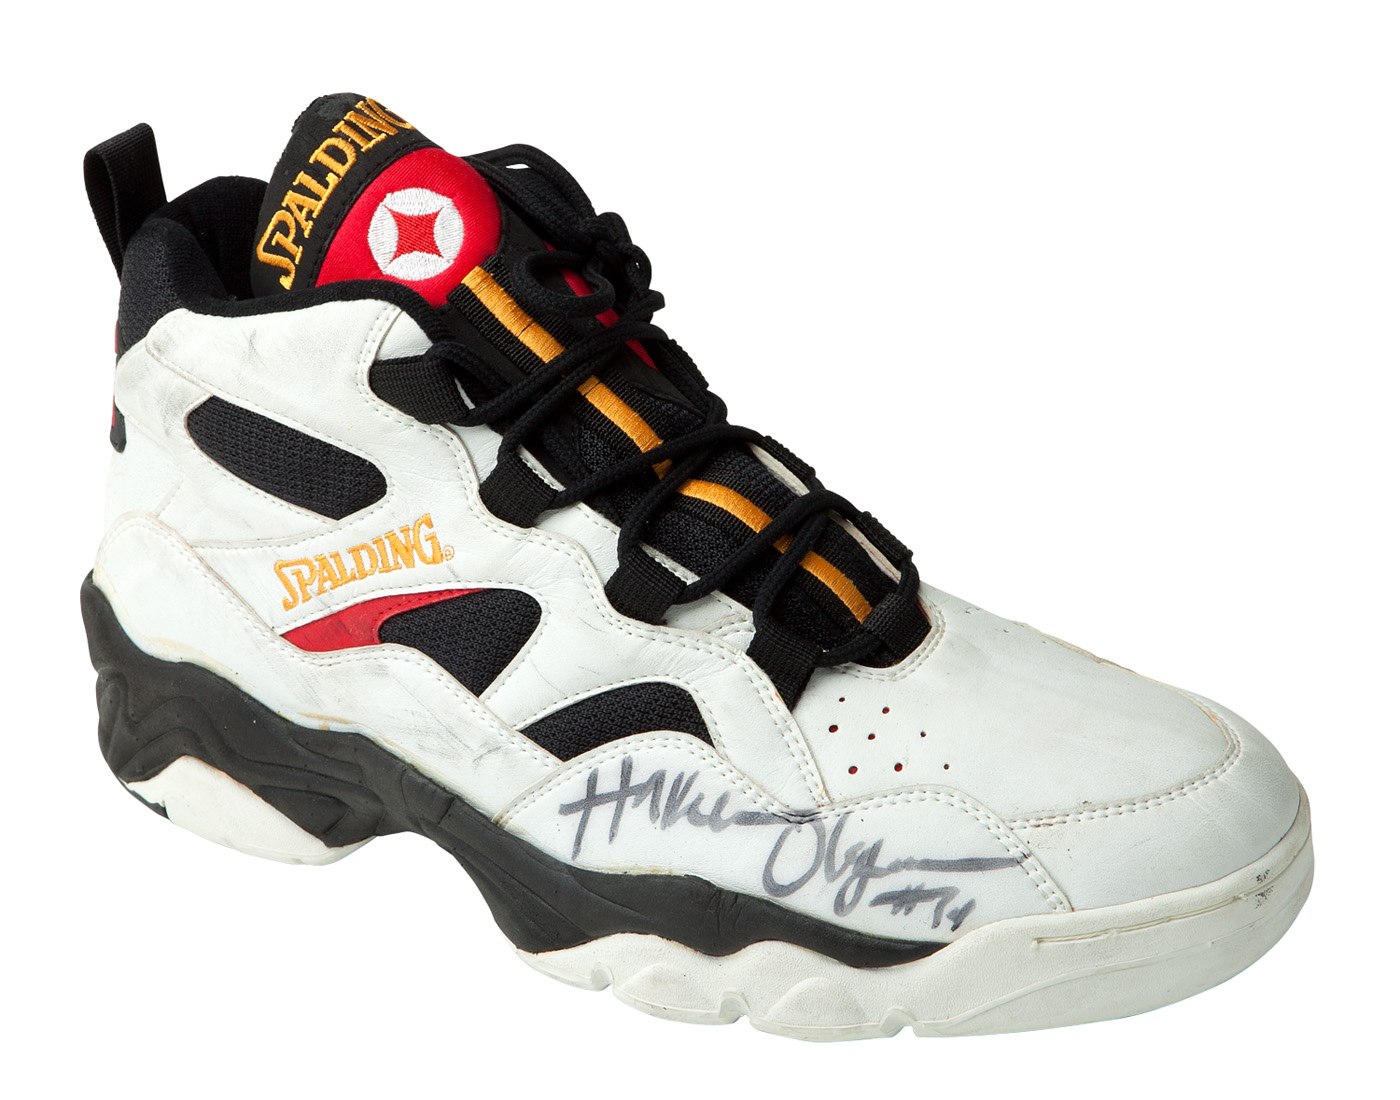 Circa 1990's Hakeem Olajuwon Game Worn, Signed Shoes